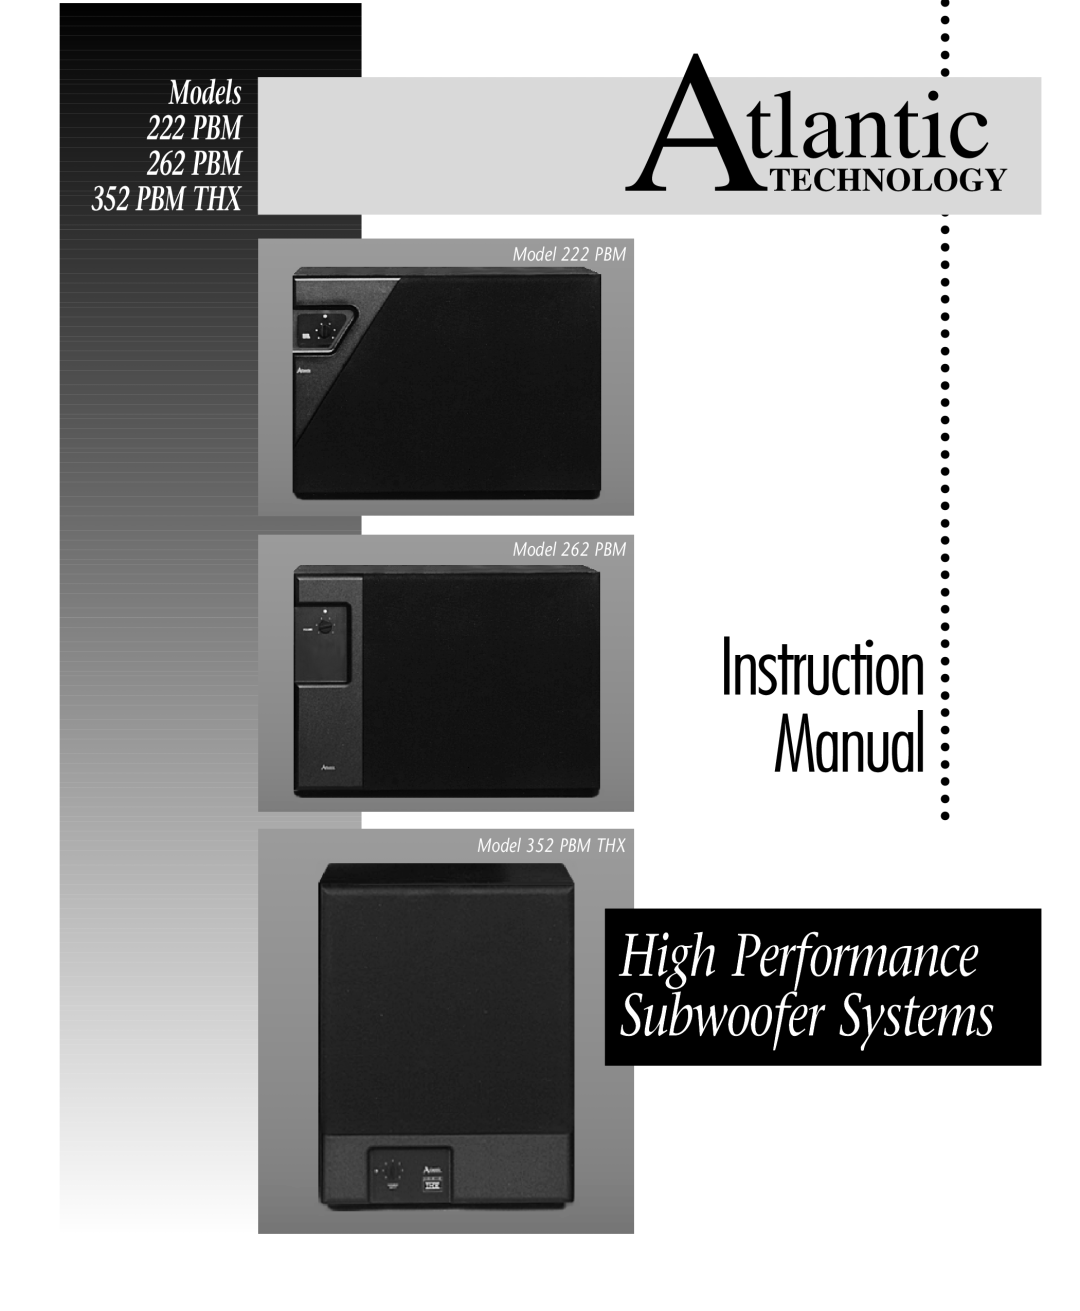 Atlantic Technology 222 PBM instruction manual Models 222PBM 262PBM 352 PBM THX, Atlantic, Instruction Manual, Technology 